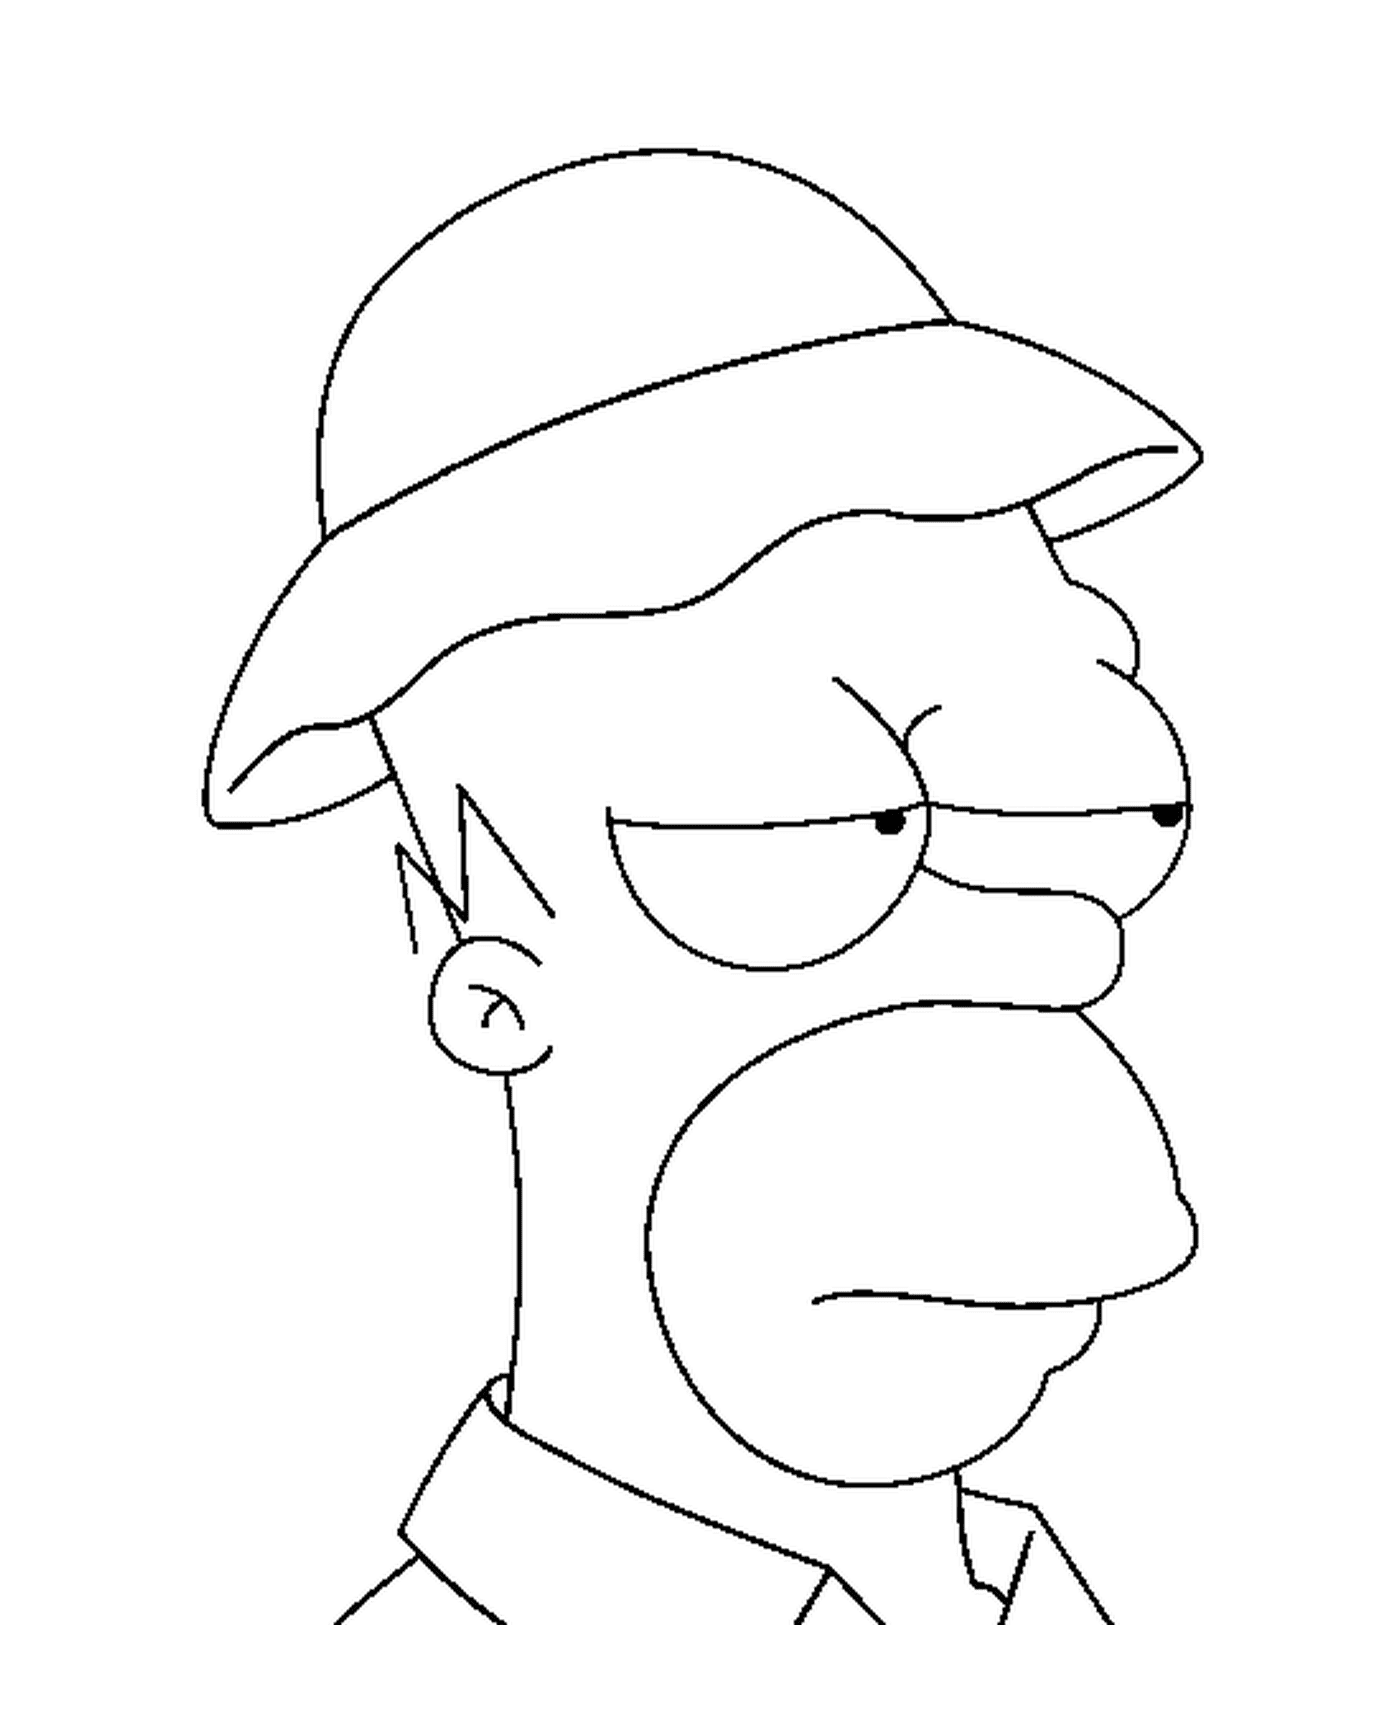  Homer Simpson na postura de guarda 